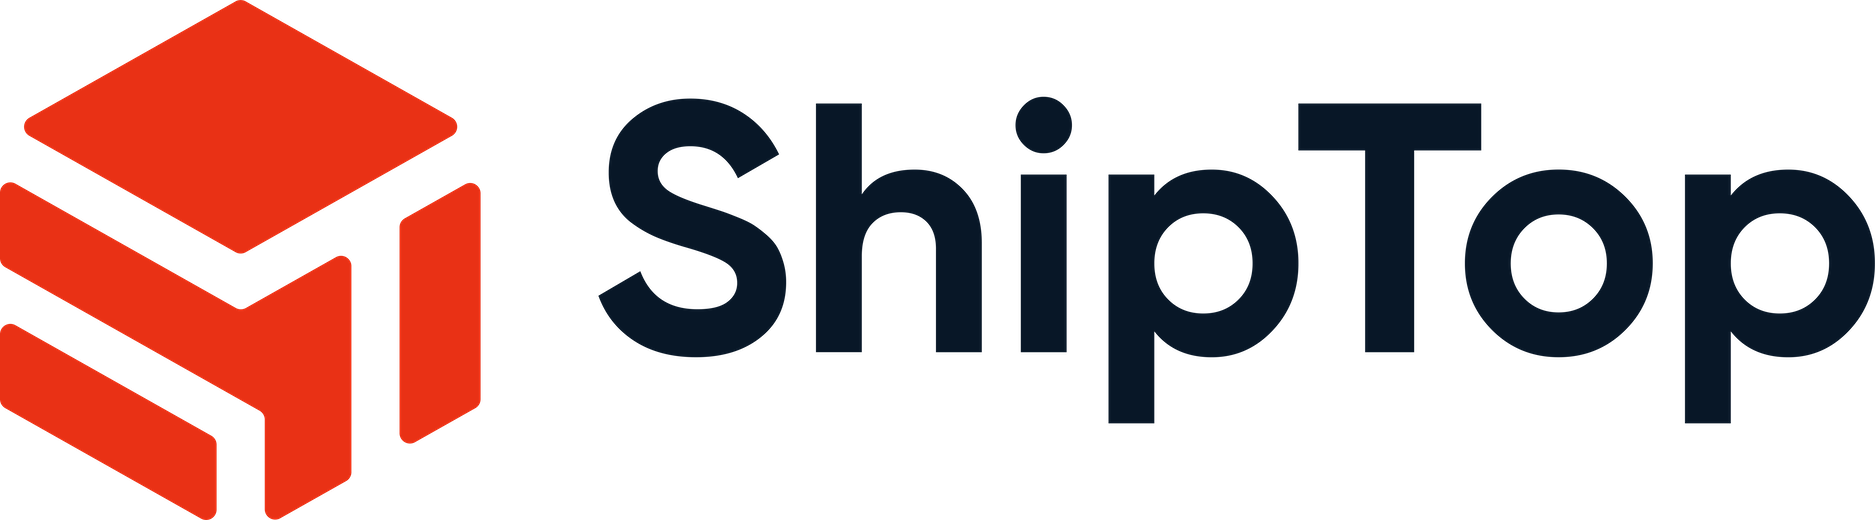 ShipTop-Fulfillmnent